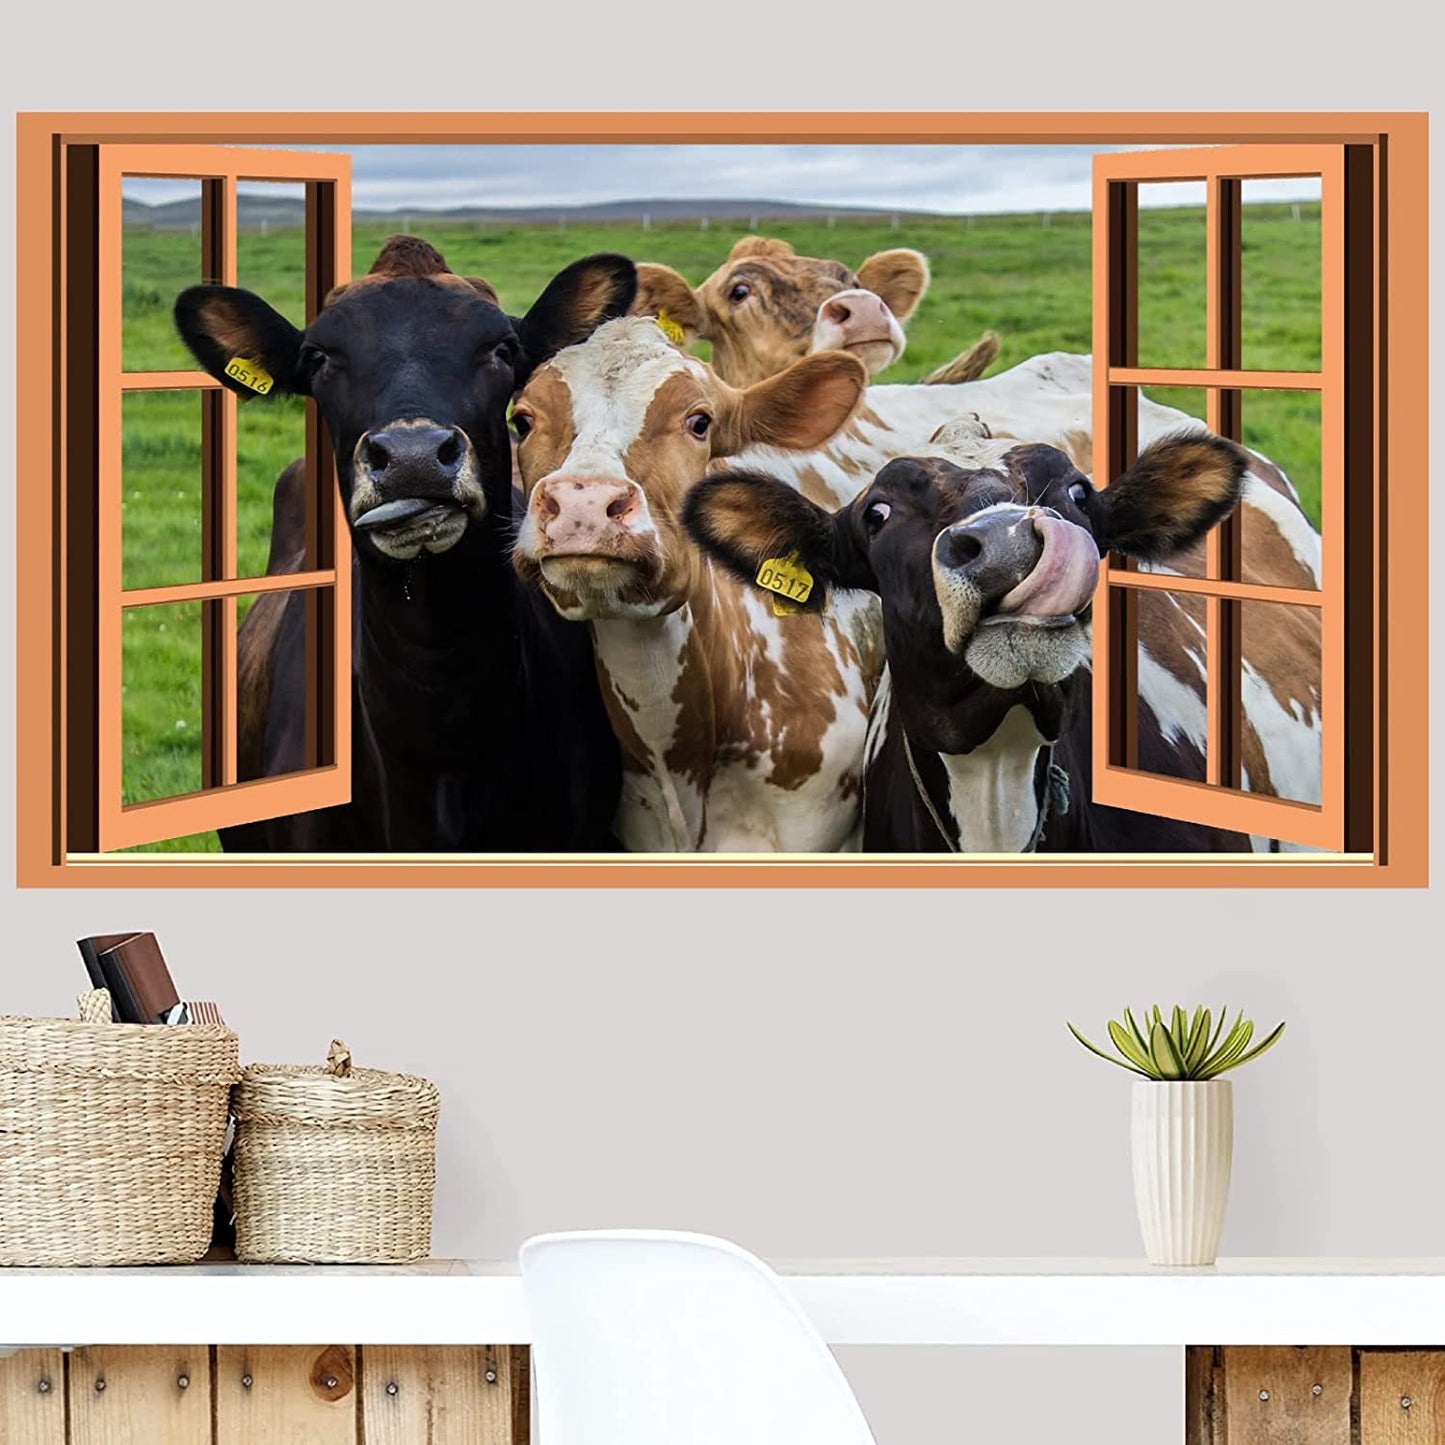 Cow Simulation Window Stickers